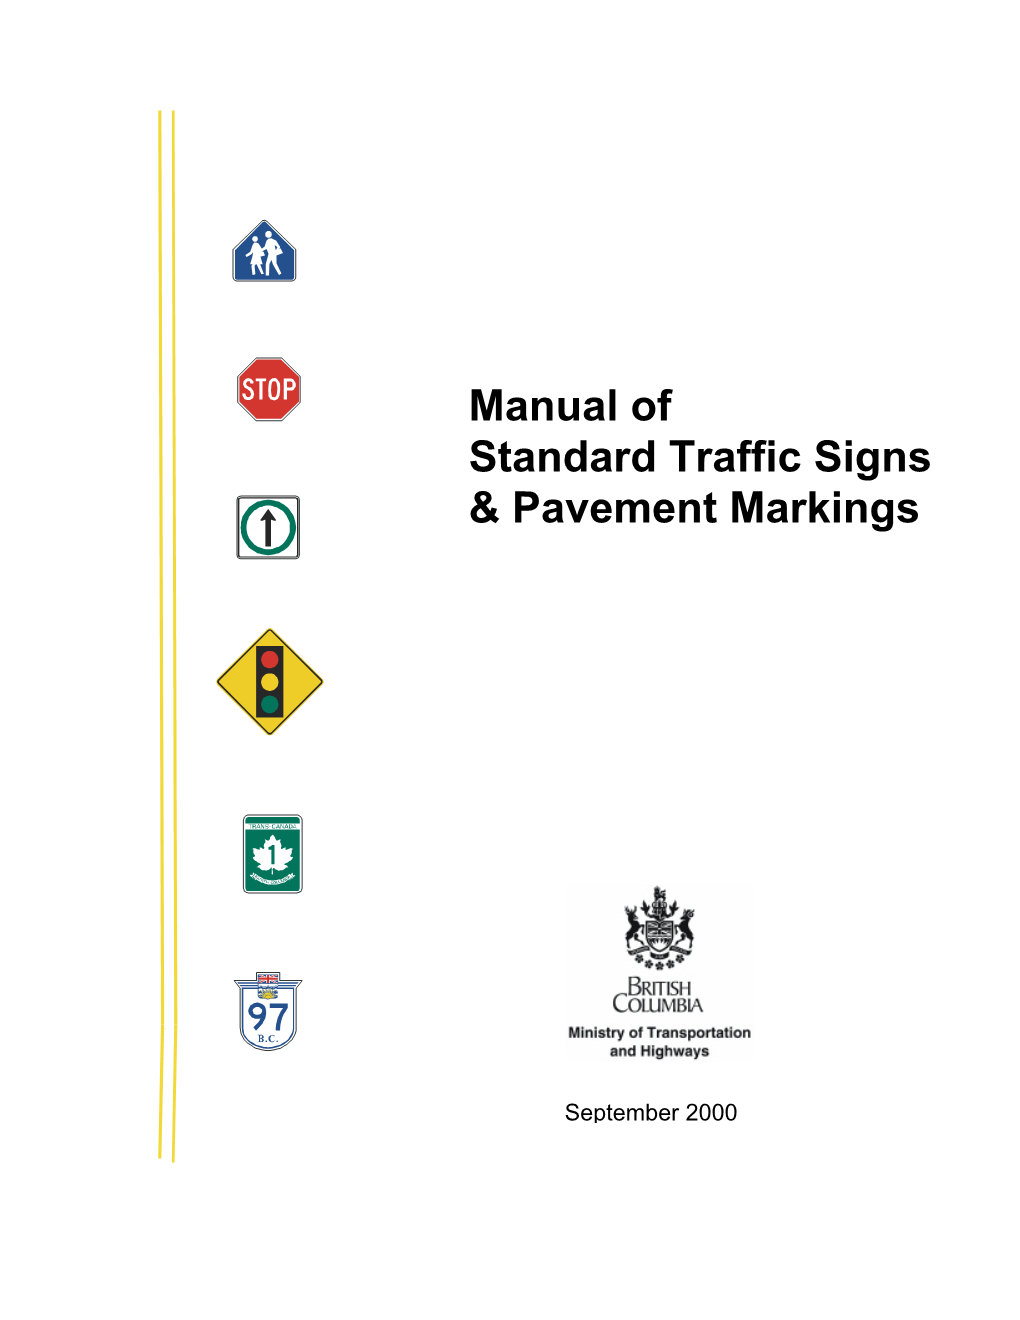 Manual of Standard Traffic Signs & Pavement Markings